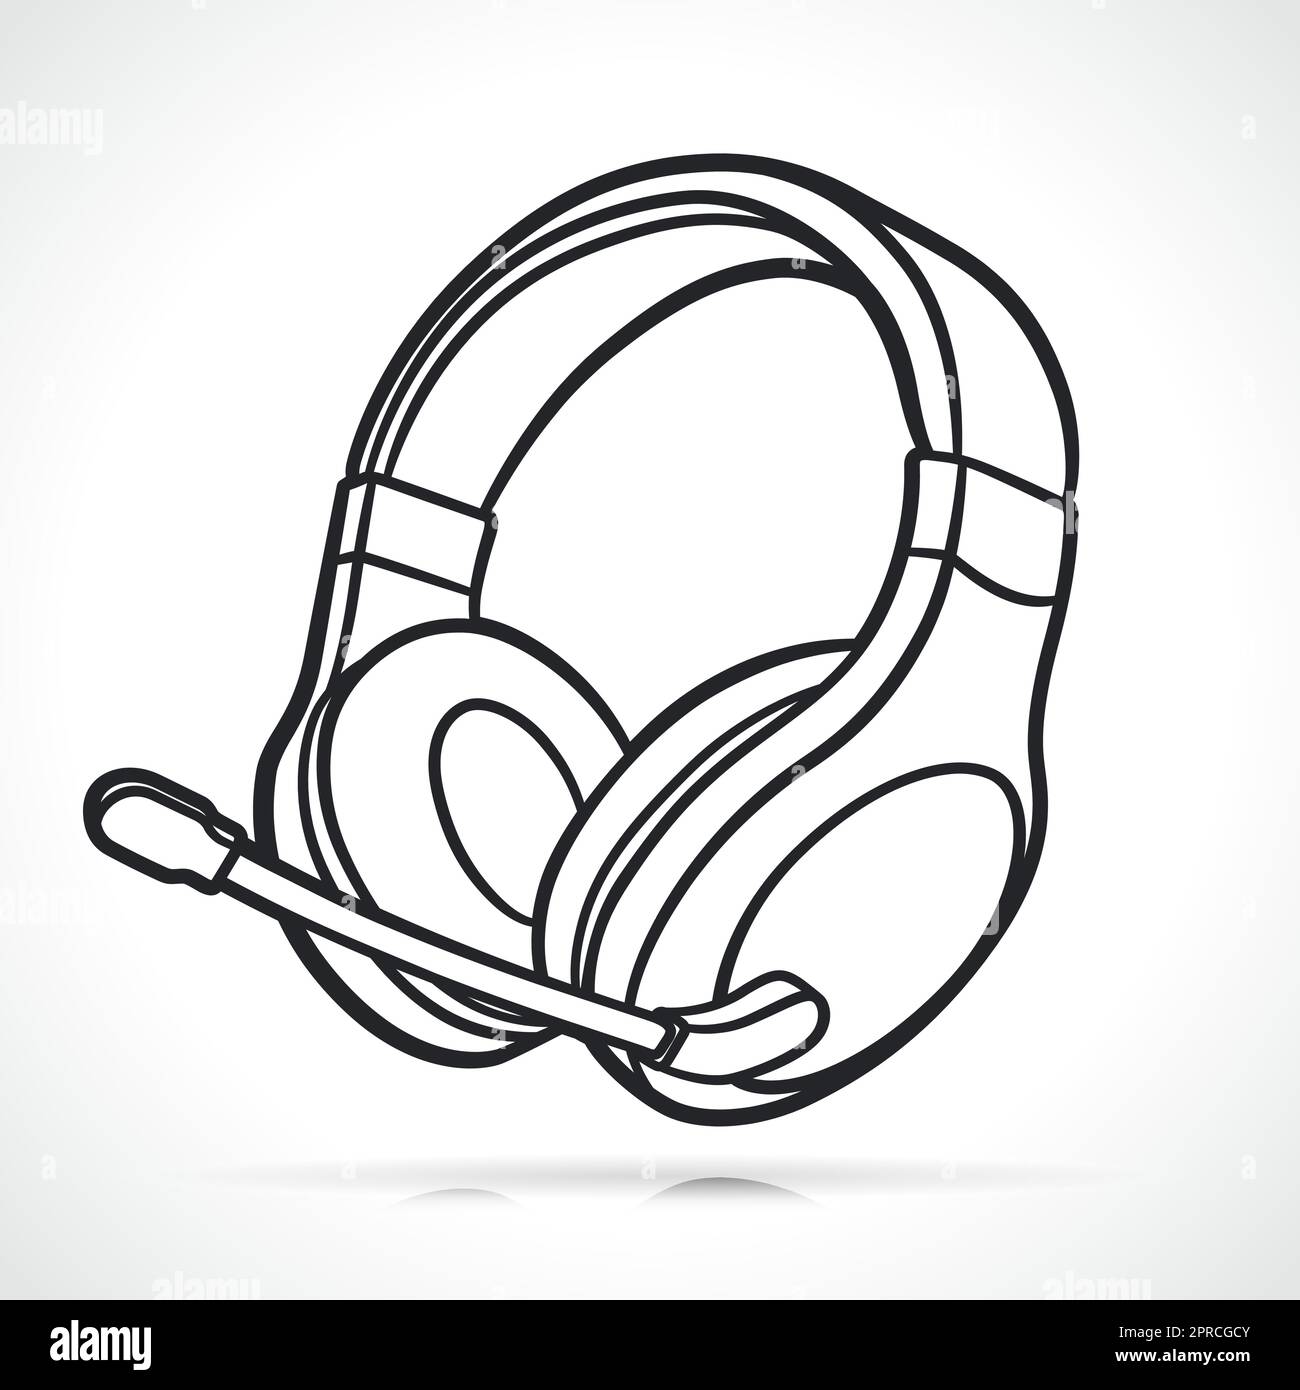 headphones black and white illustration Stock Vector